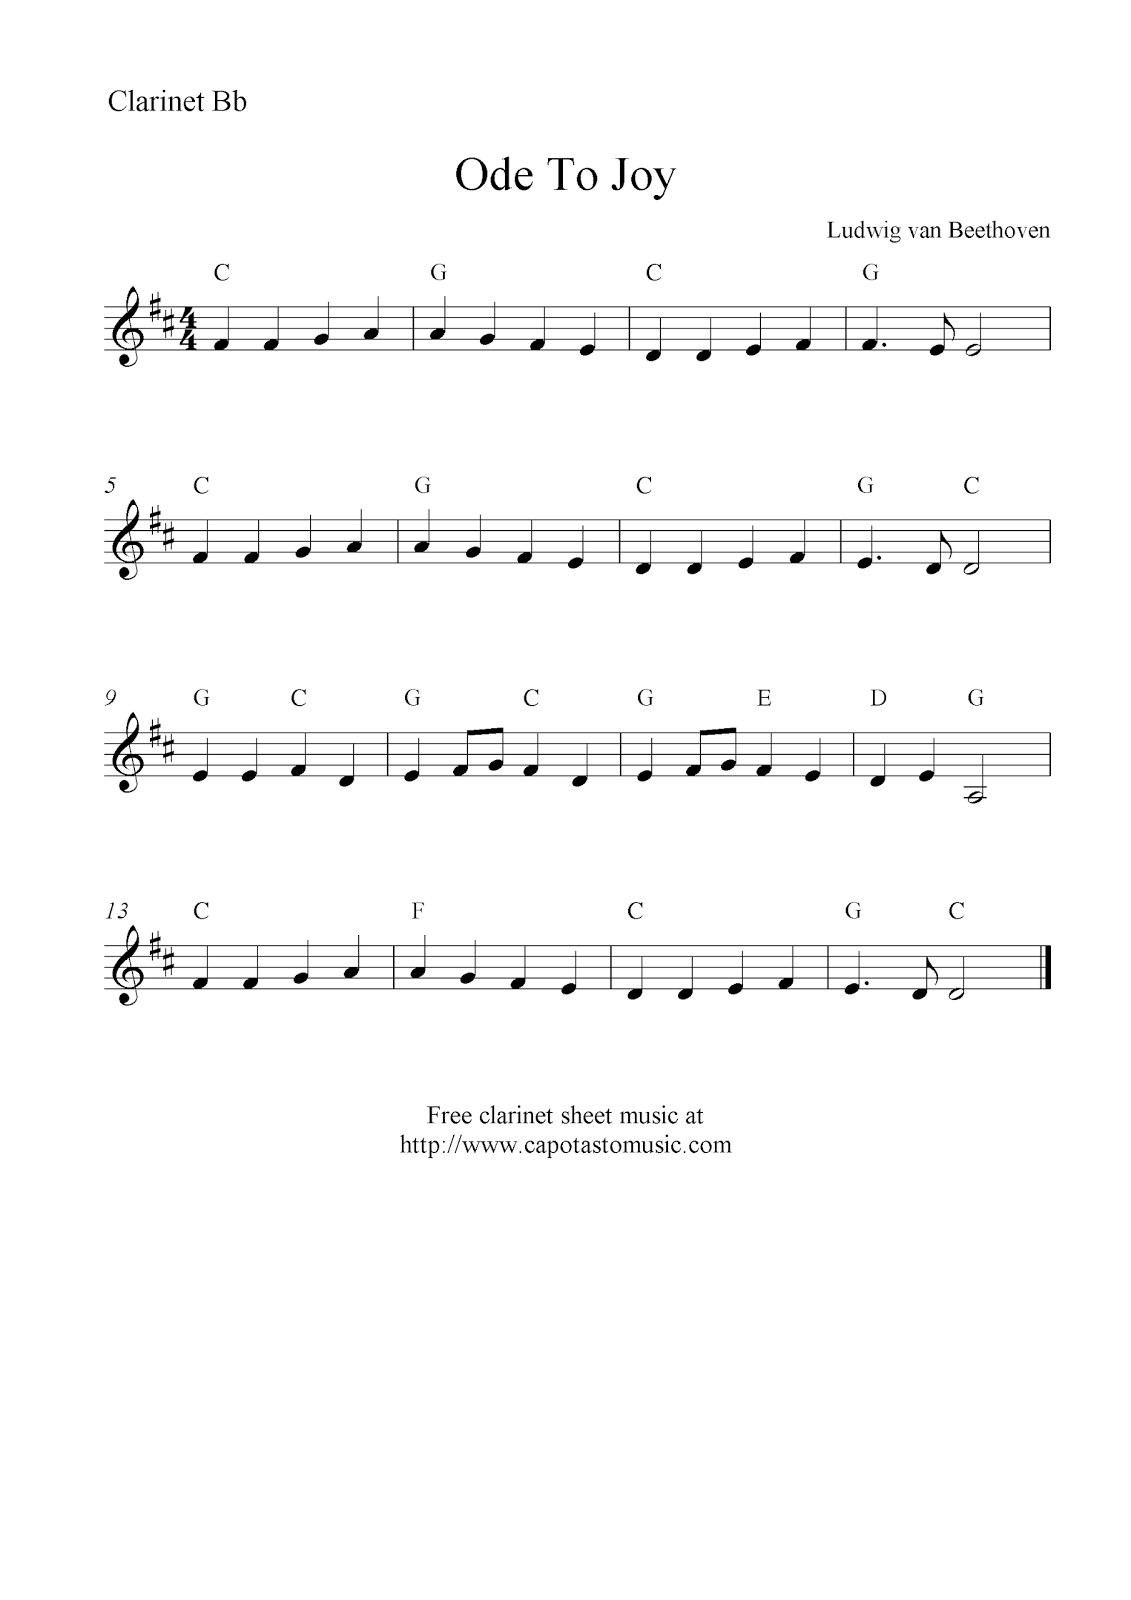 Ode To Joybeethoven, Free Clarinet Sheet Music Notes - Free Printable Clarinet Music